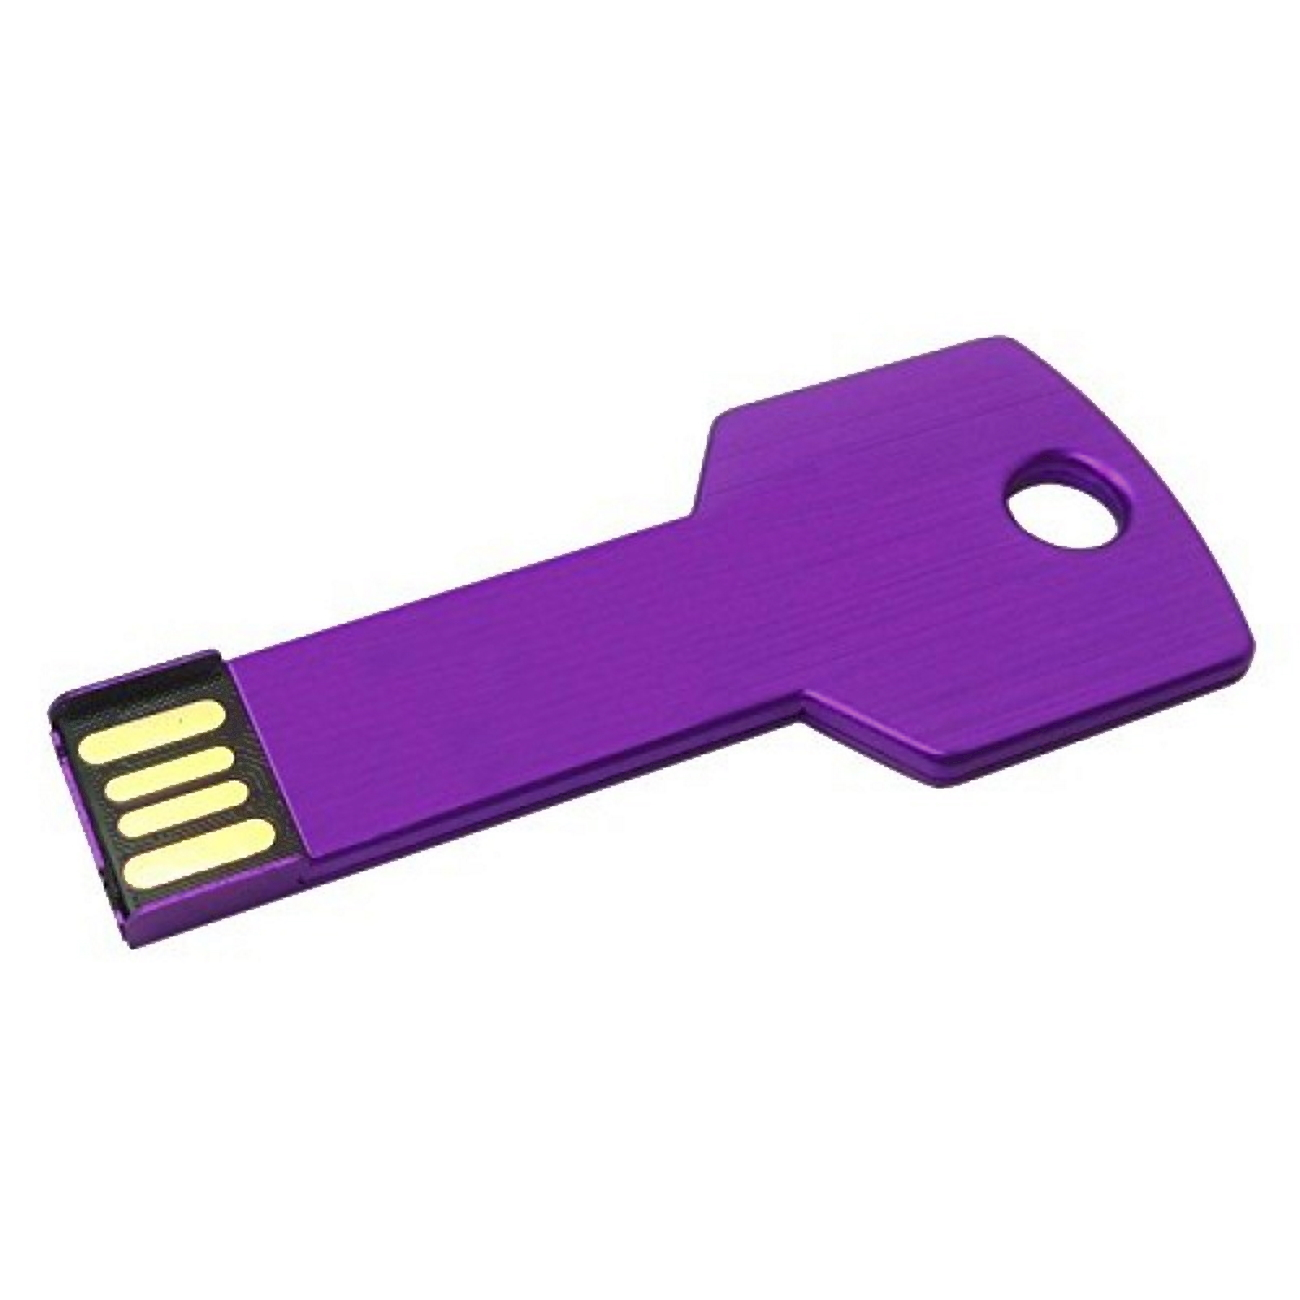 2 USB Key GB) GERMANY 2GB (Lila, USB-Stick Lila